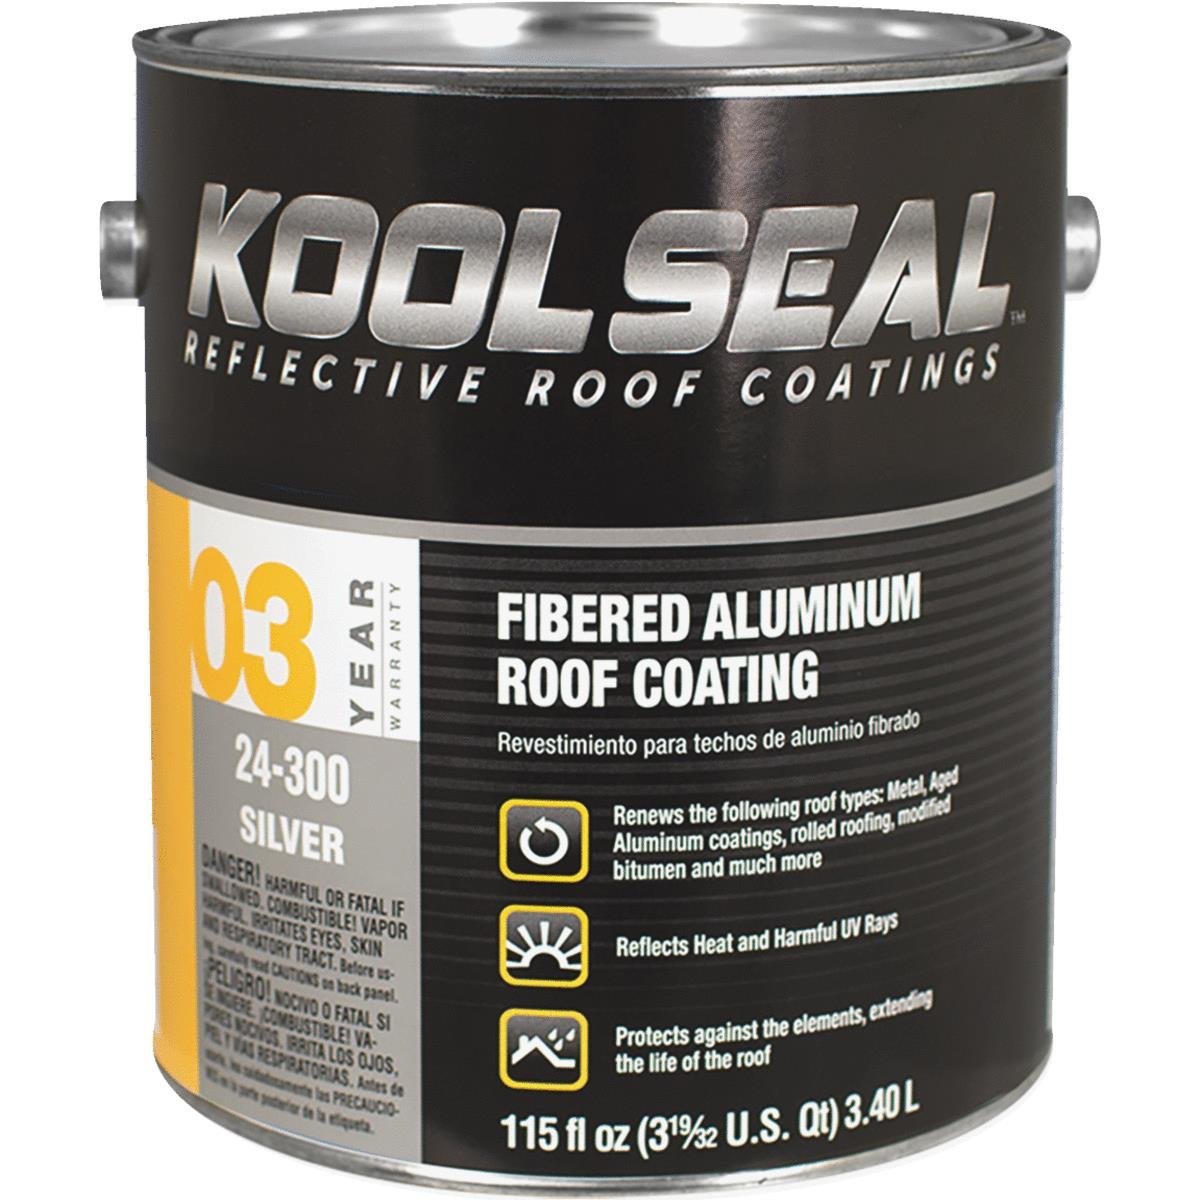 Ks0024300-16 Roof Coat Filtered Aluminum - 3 Year - Pack Of 4